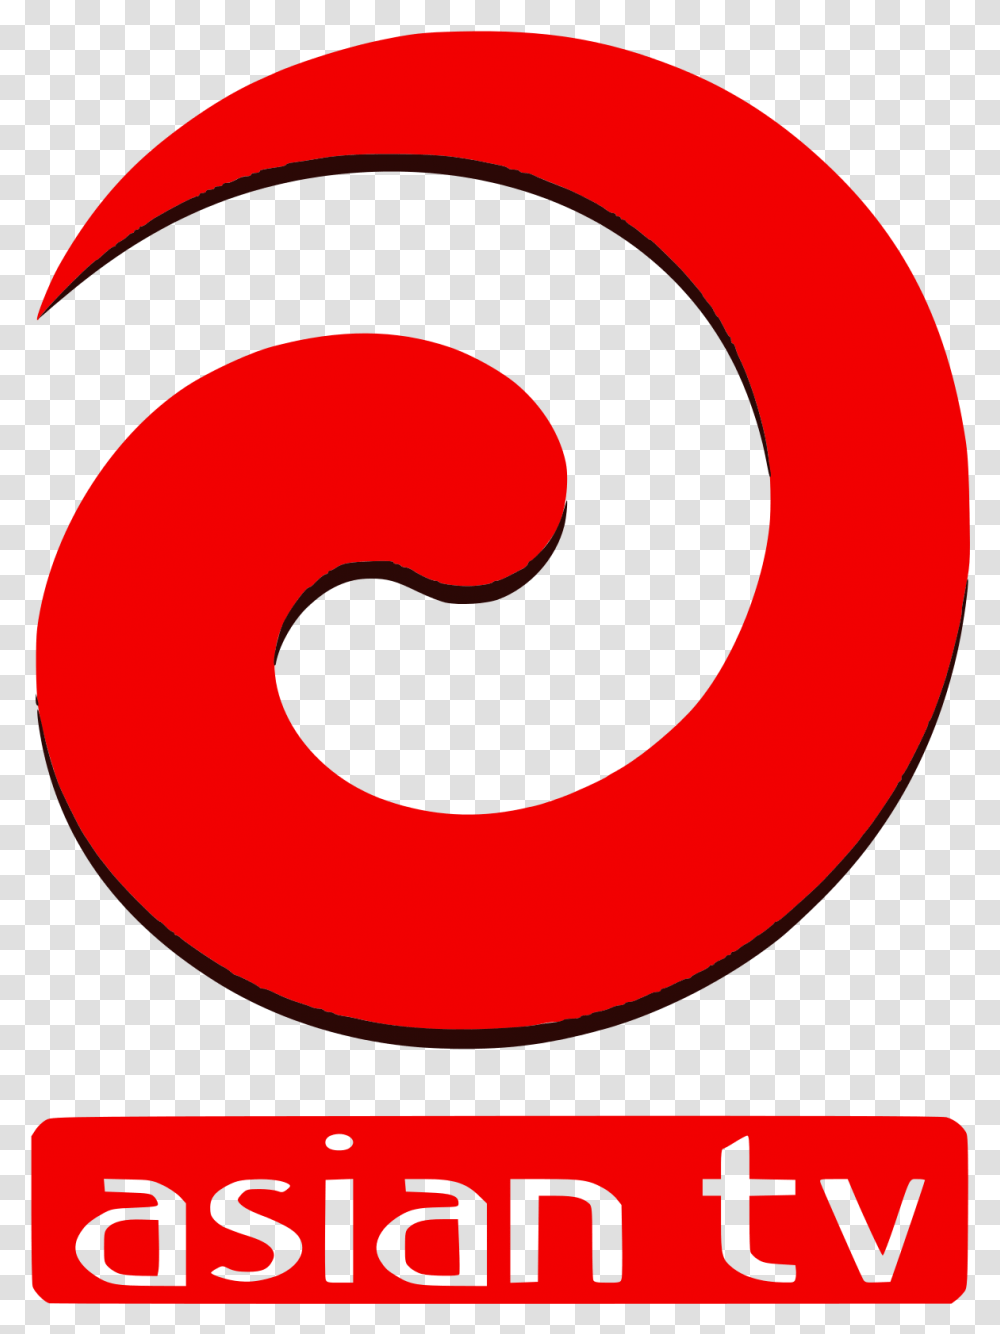 Asian Tv Wikipedia Asian Tv Bangladesh Logo, Poster, Advertisement, Spiral, Text Transparent Png